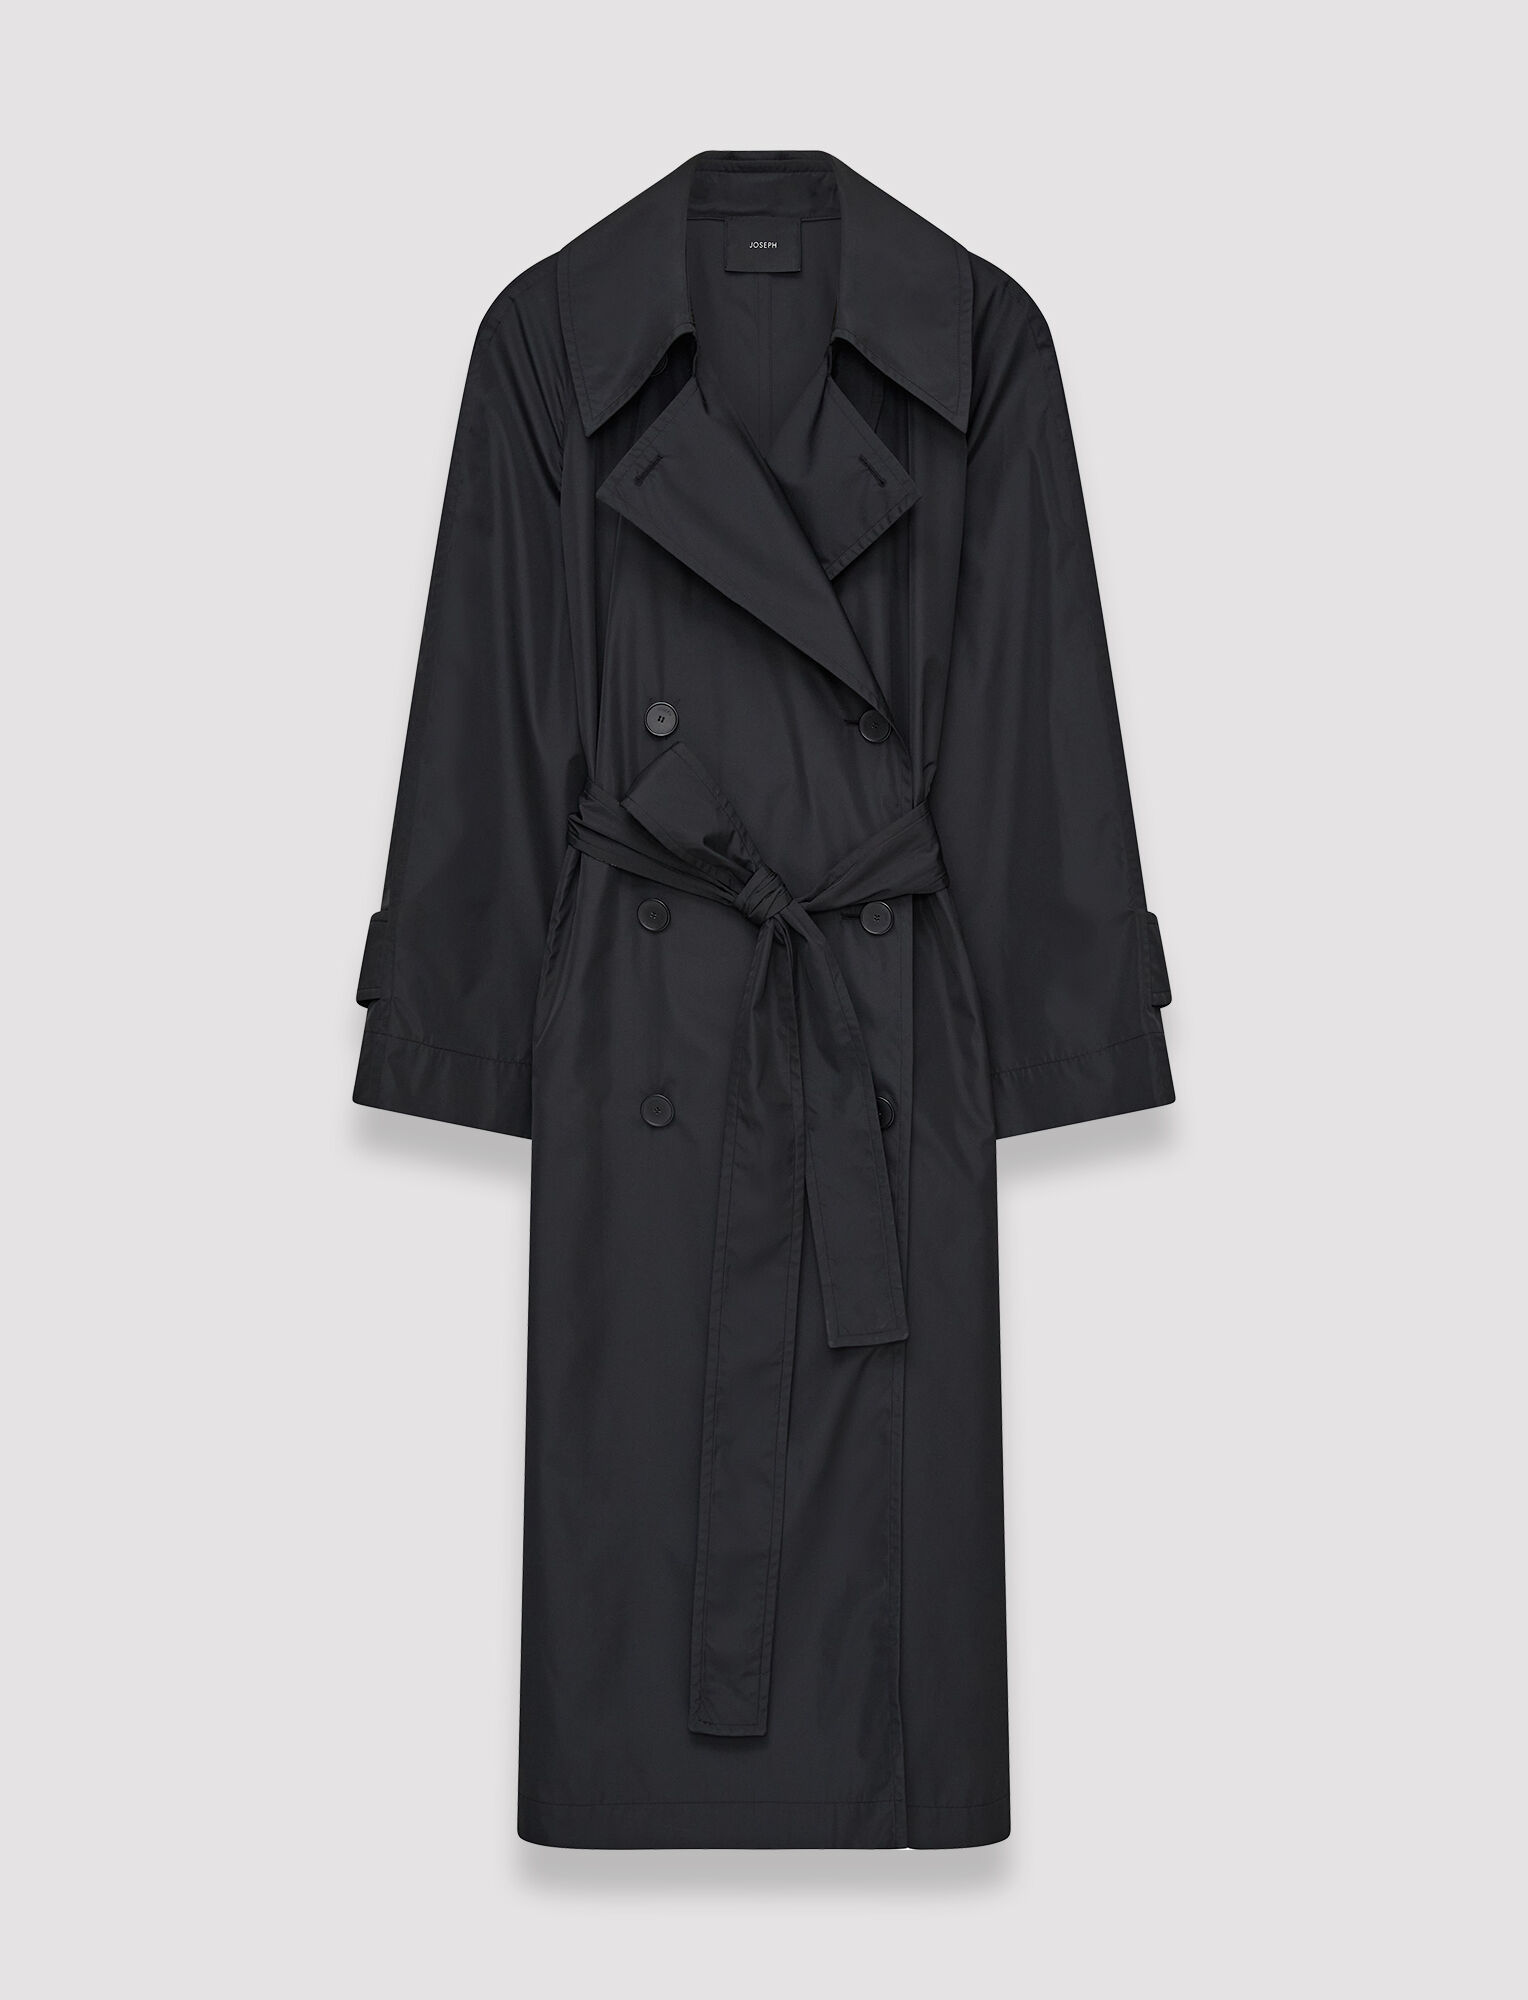 Joseph, Rainwear Chatsworth Coat, in Black